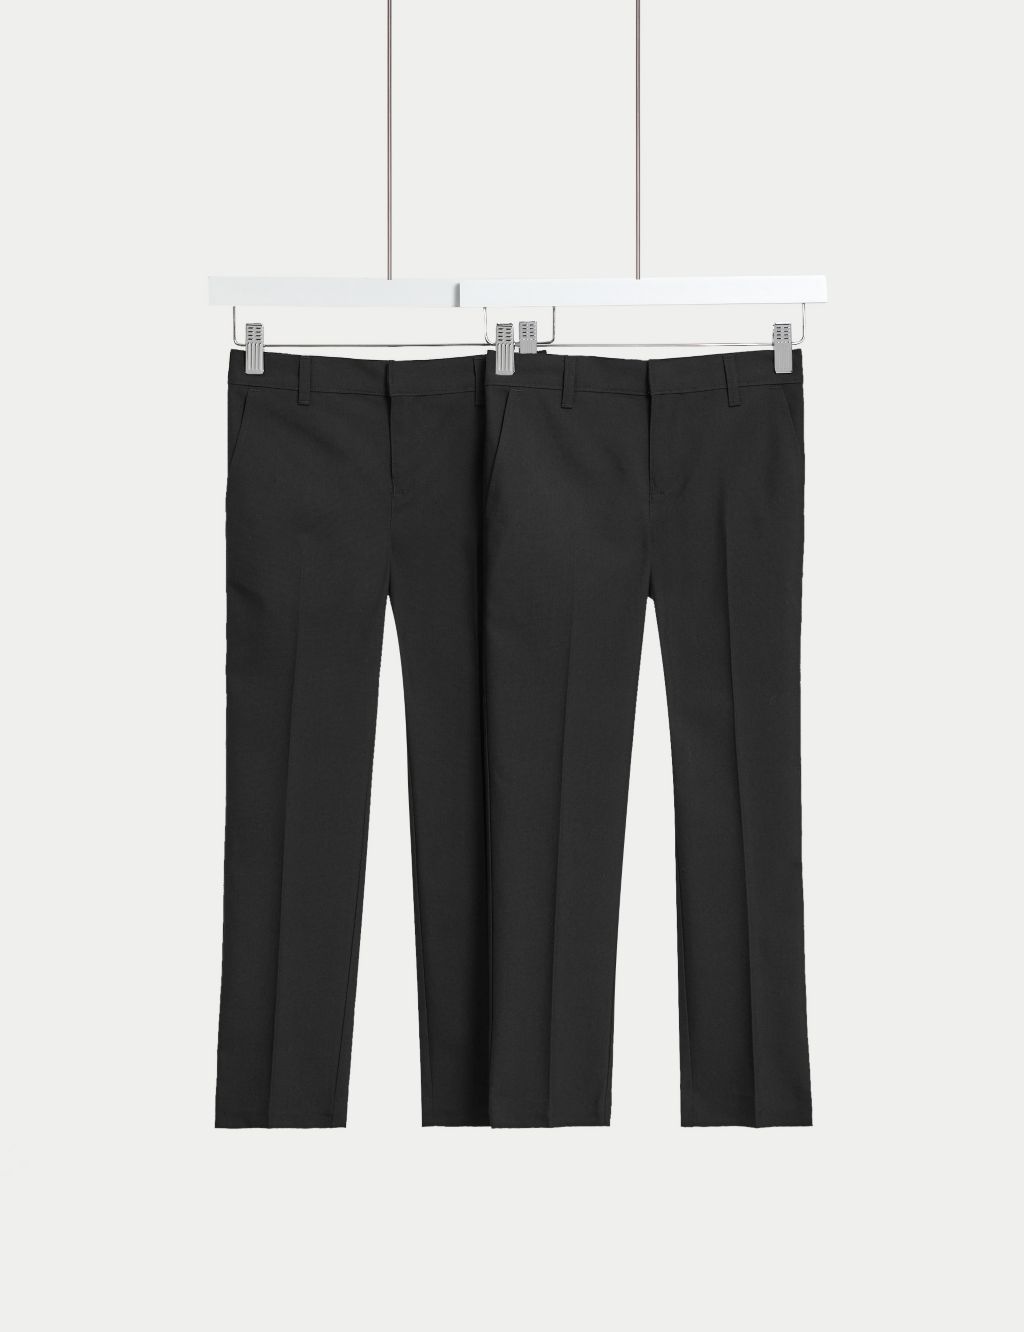 School Uniform Pant For Kids Regular Fit (Grey)